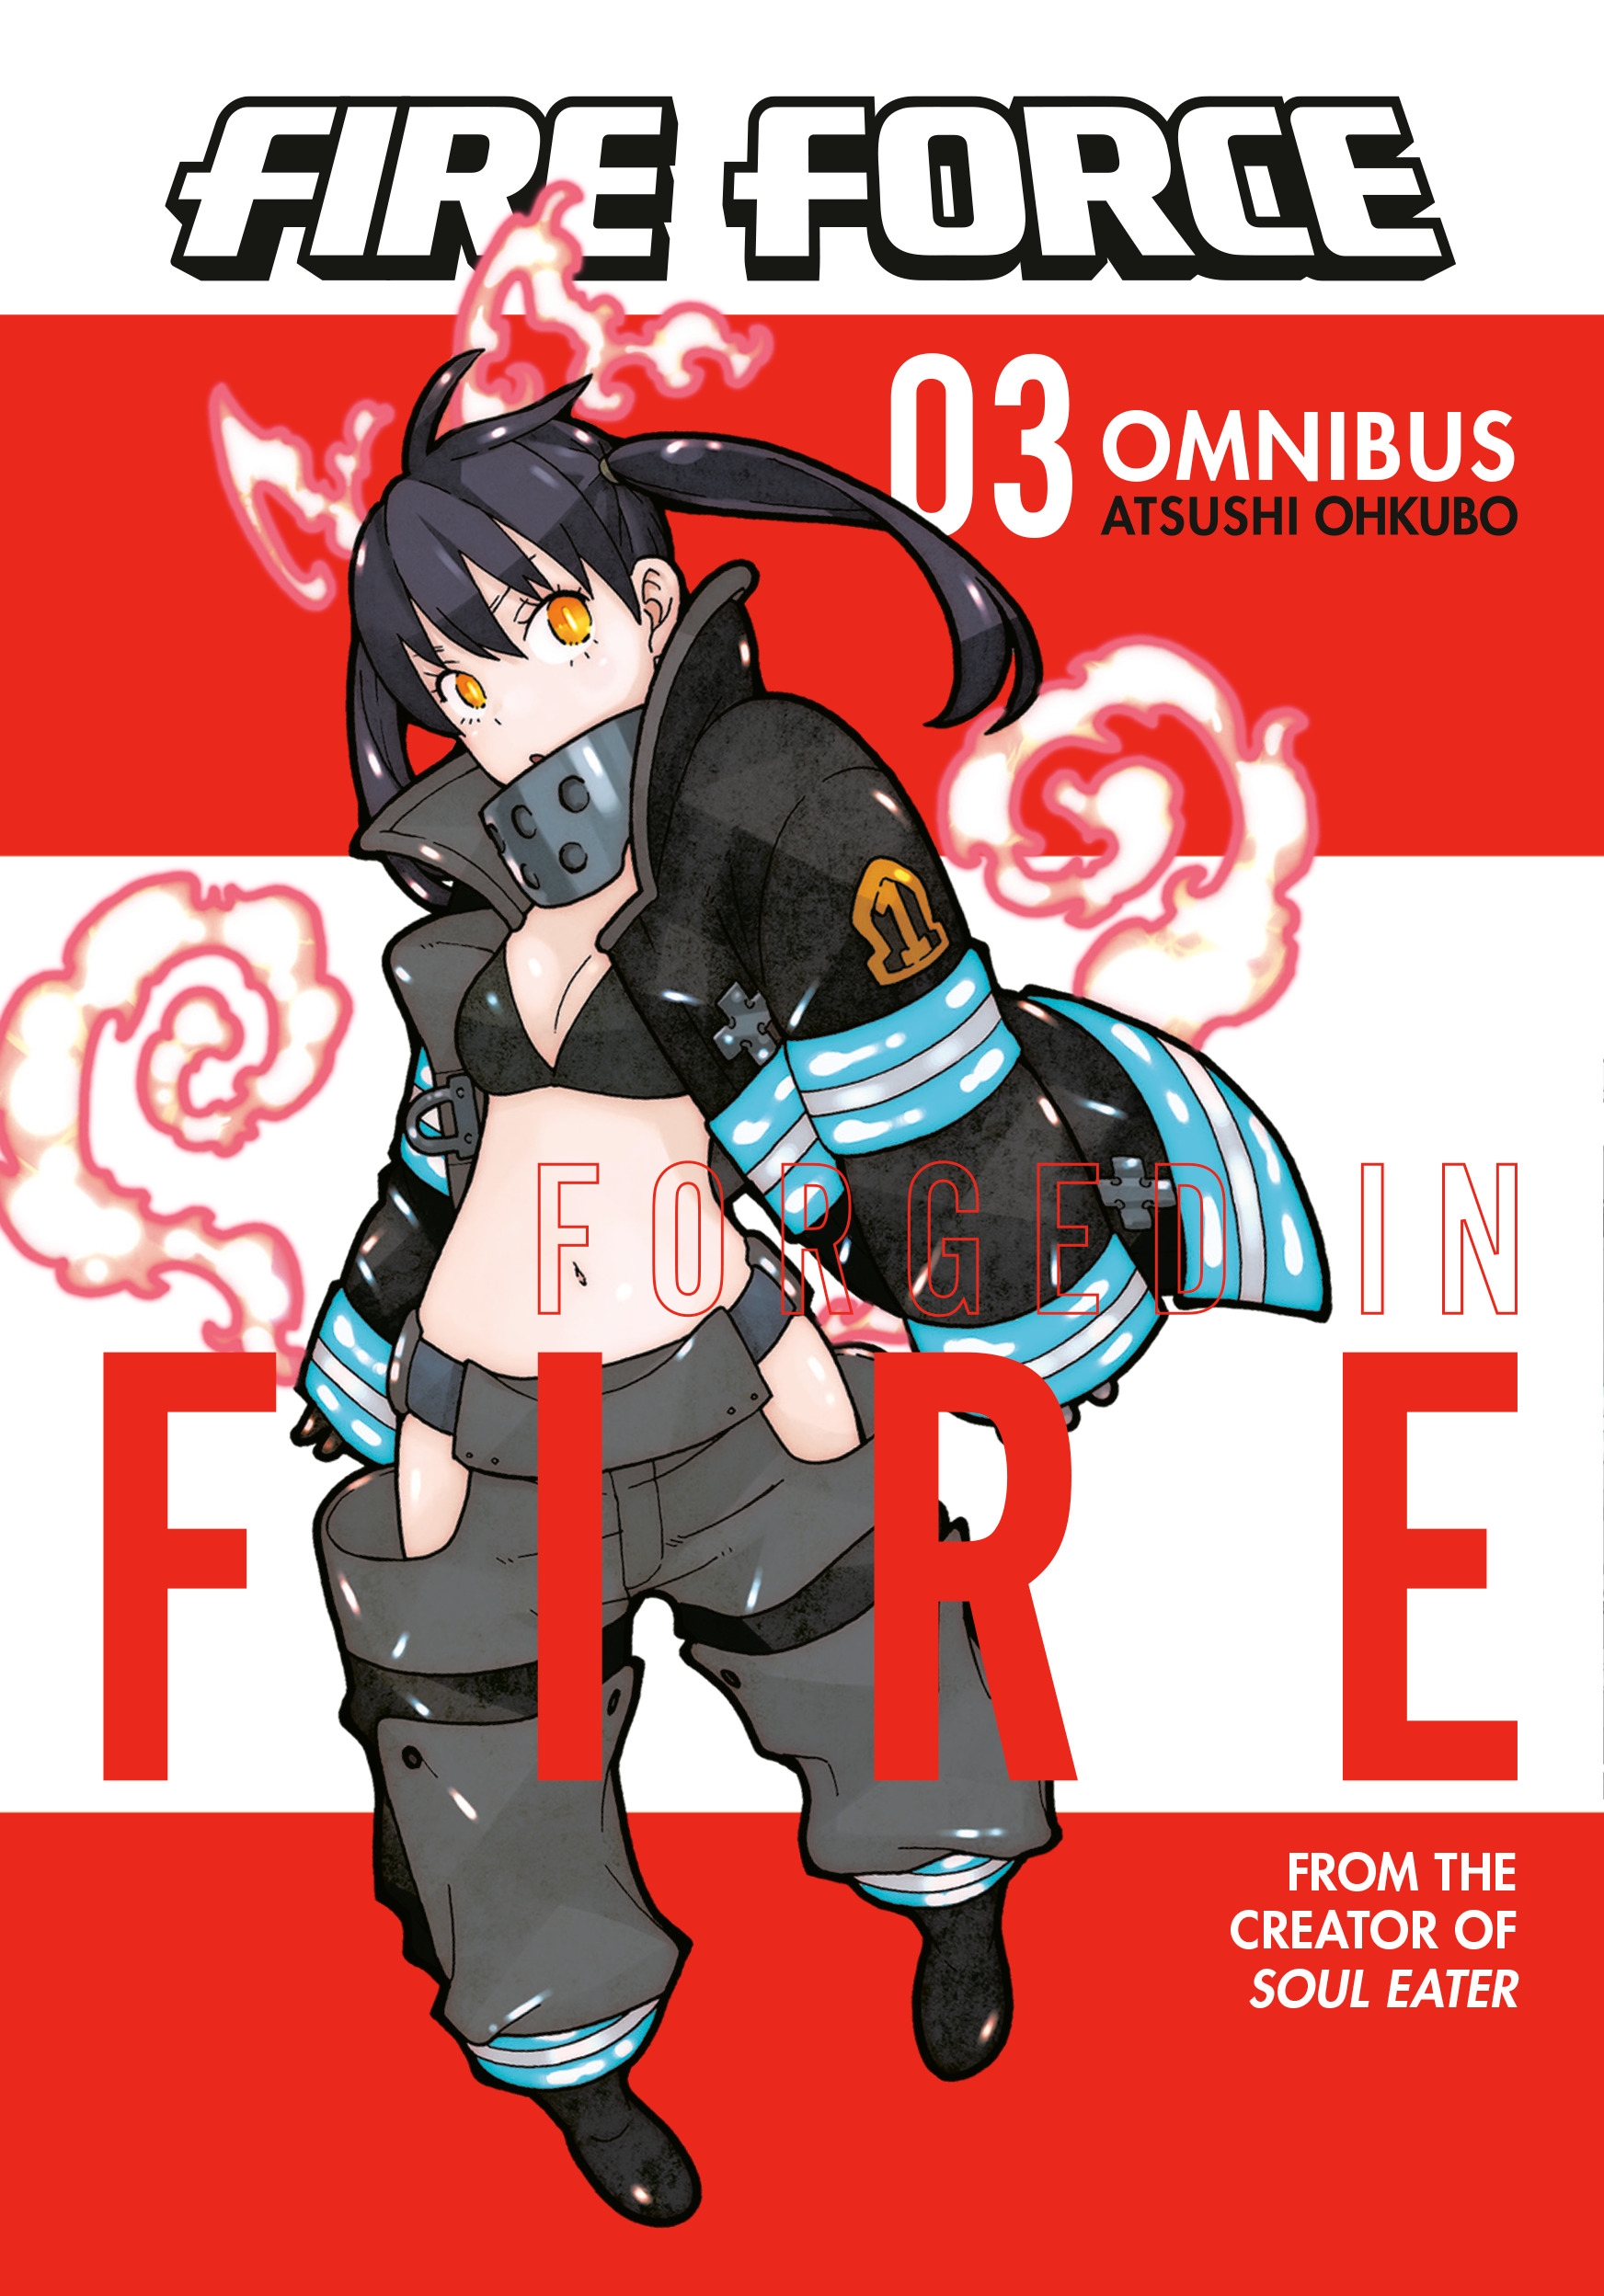 MyAnimeList on X: .@Atsushi_Ohkubo's sci-fi action manga Enen no  Shouboutai (Fire Force) receives TV anime adaptation by David Production   #炎炎ノ消防隊  / X